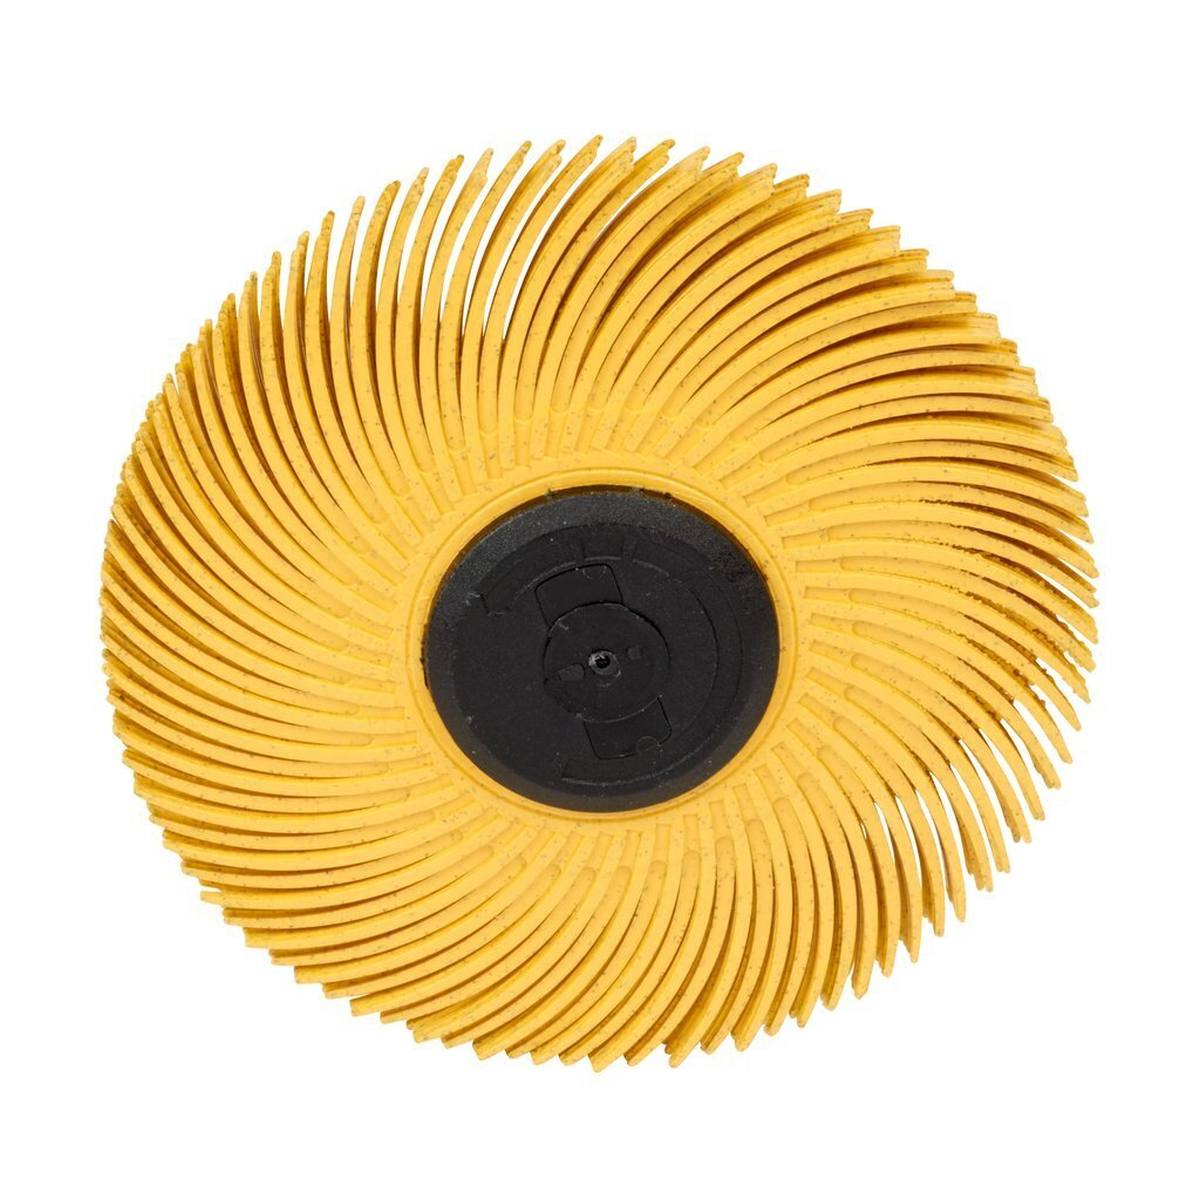 3M Scotch-Brite Radiale borstelschijf BB-ZS met as, geel, 76,2 mm, P80, type C #62968